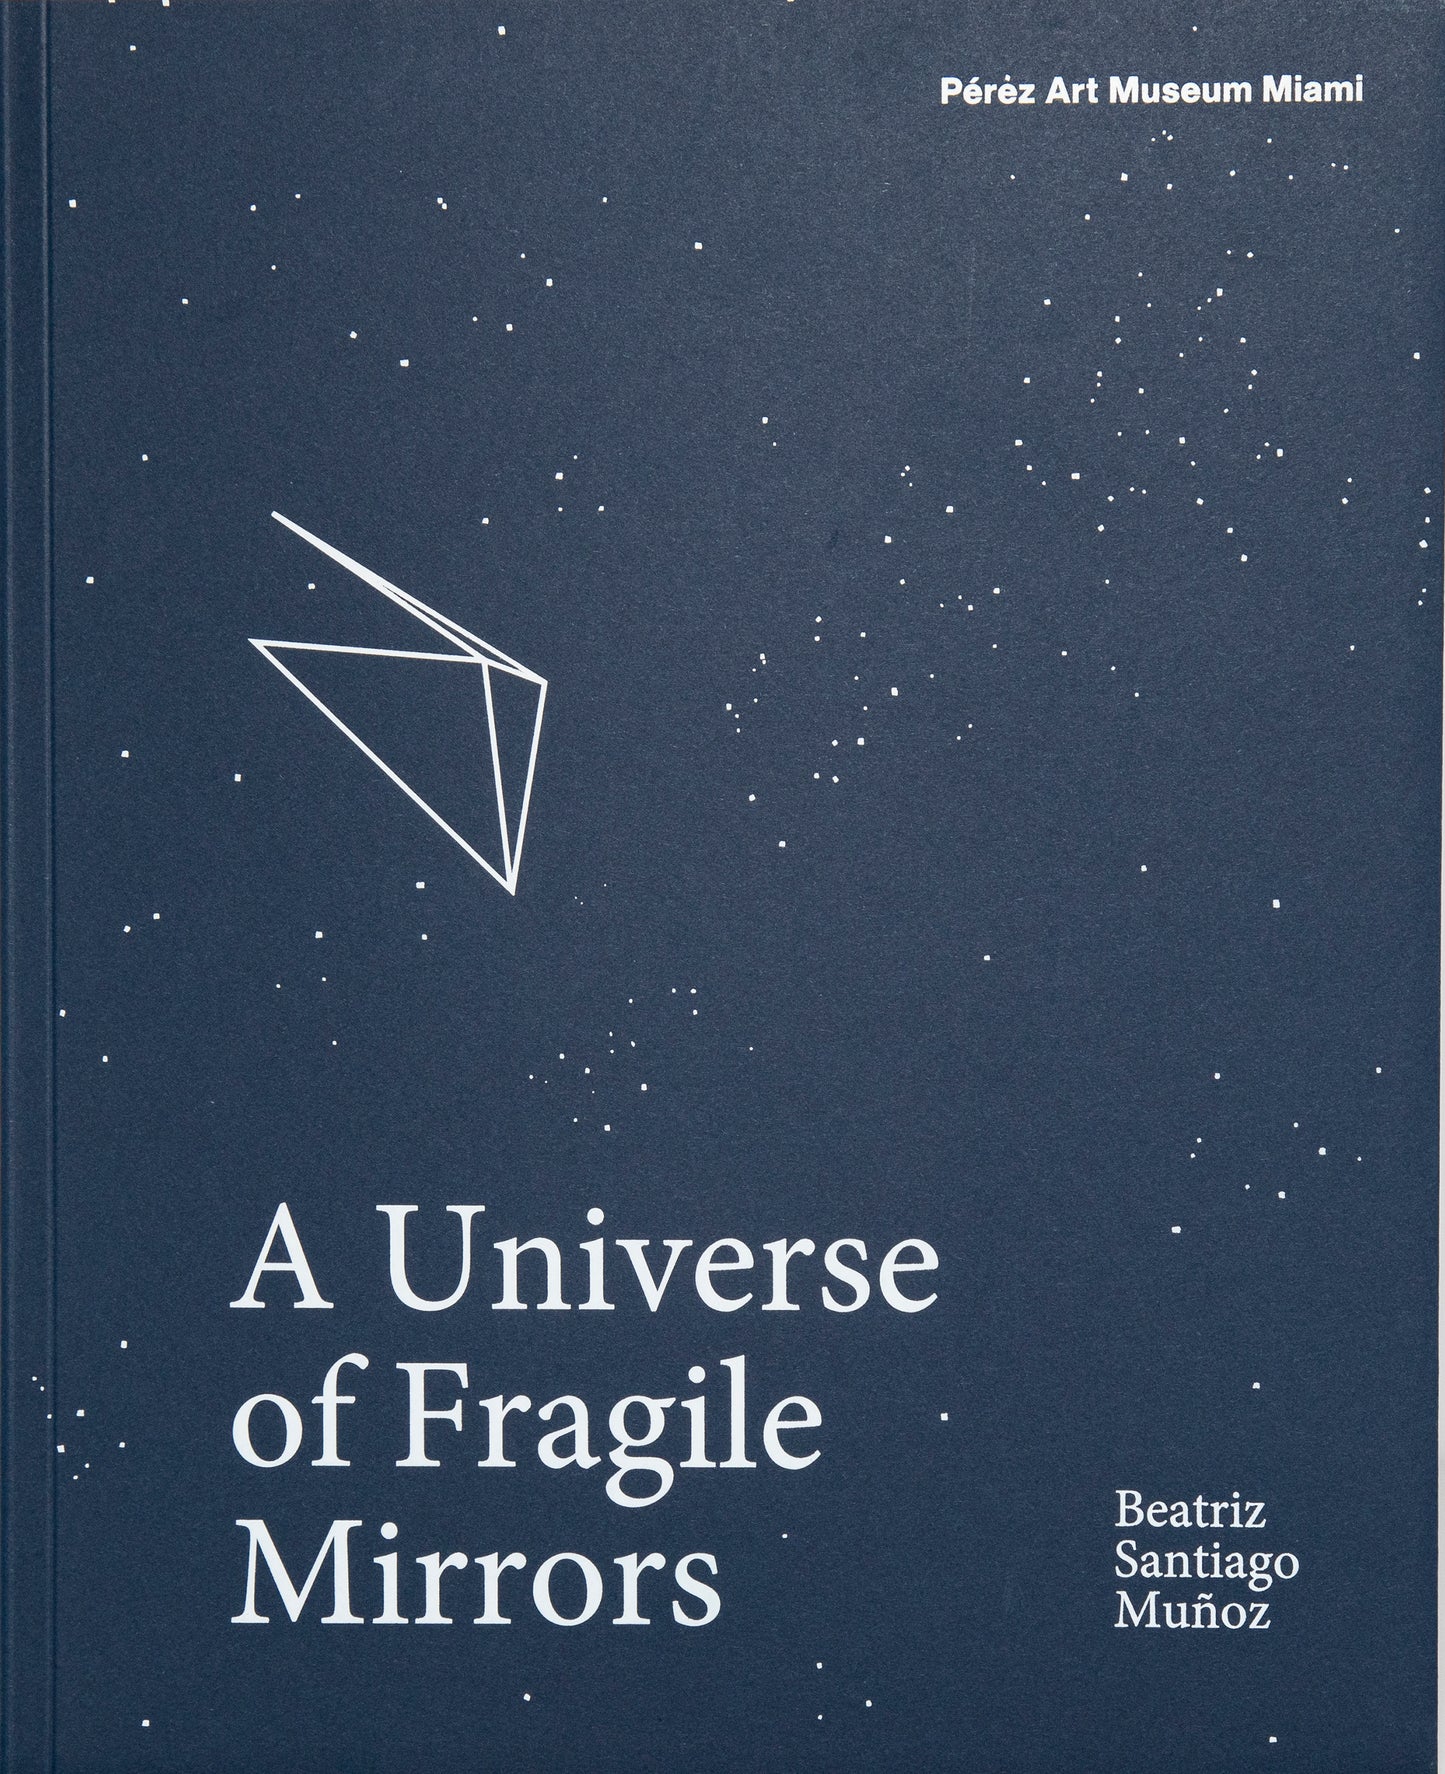 Beatriz Santiago Muñoz: A Universe of Fragile Mirrors